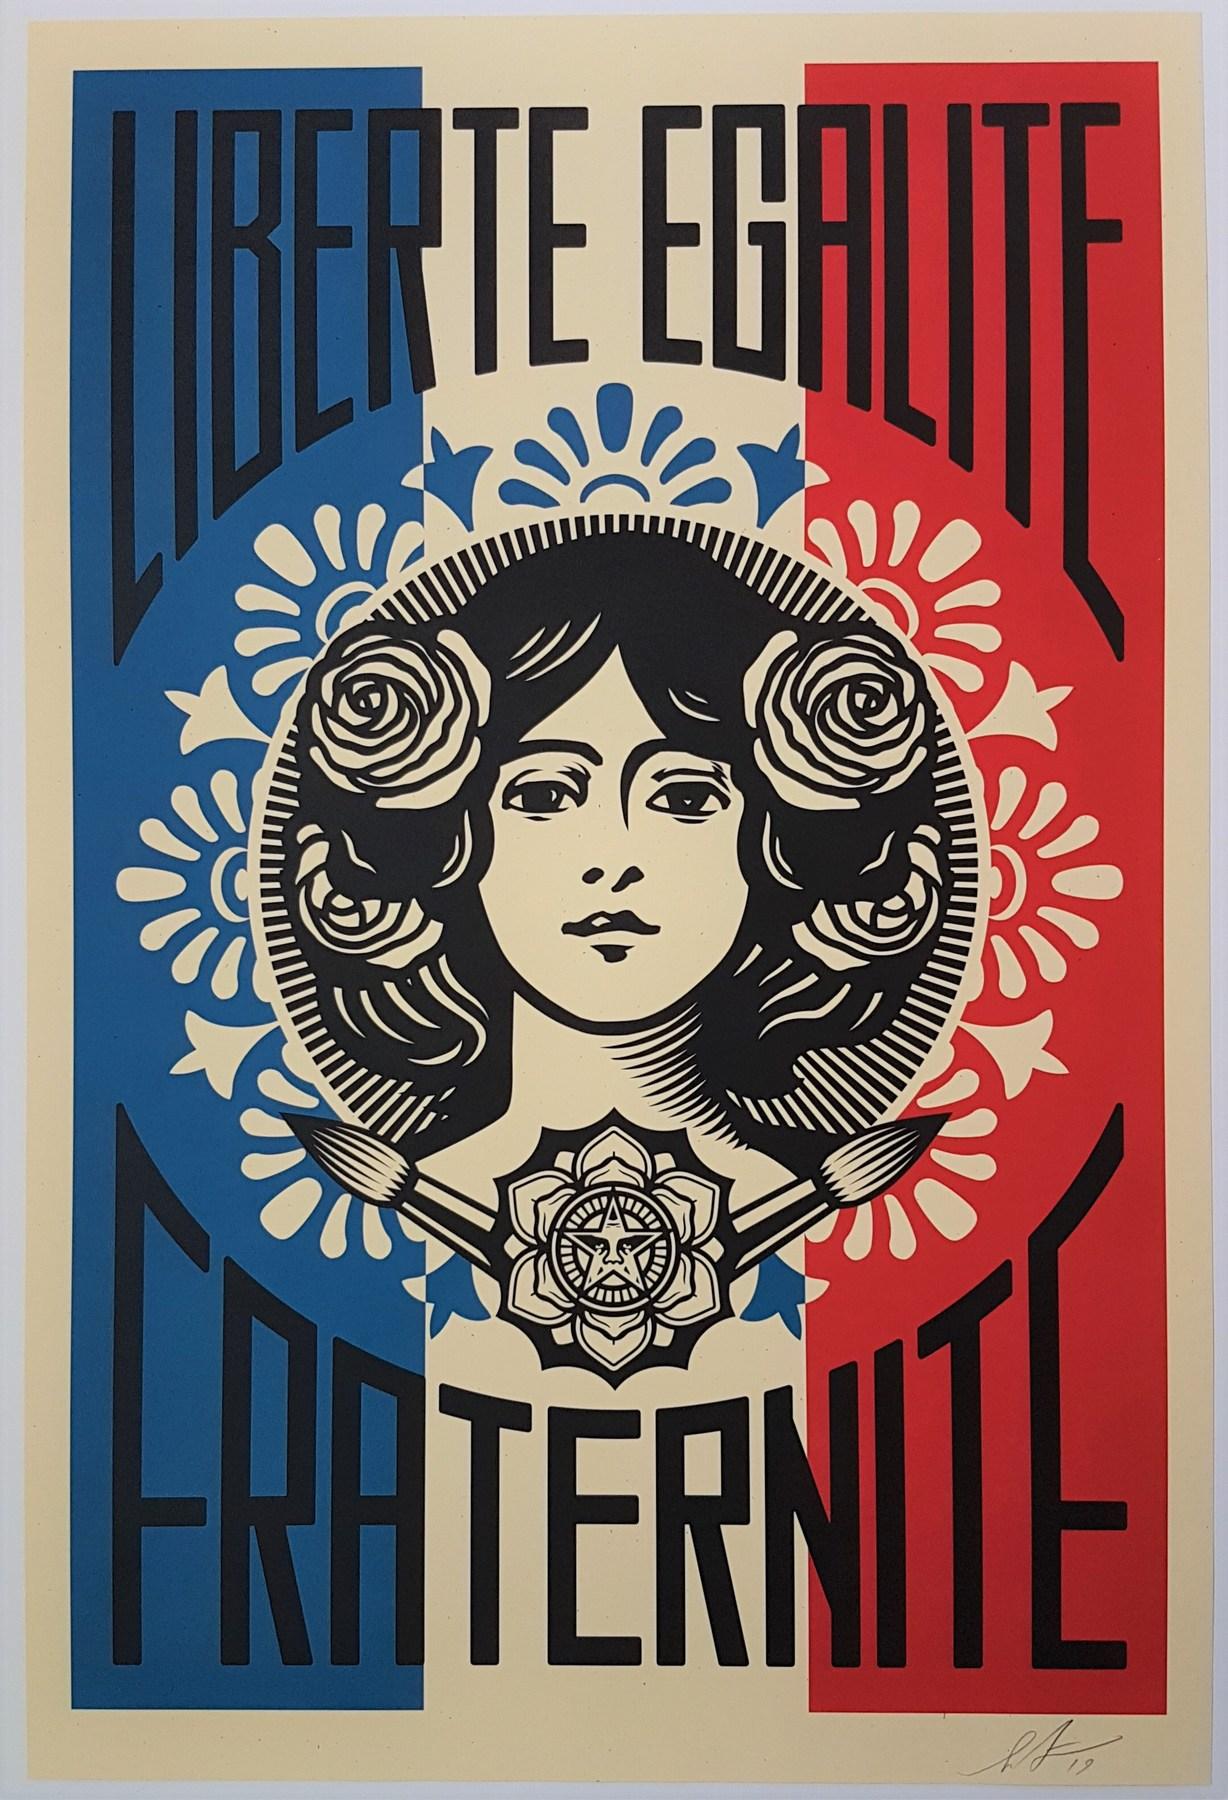 Liberte Egalite Fraternite - Print by Shepard Fairey